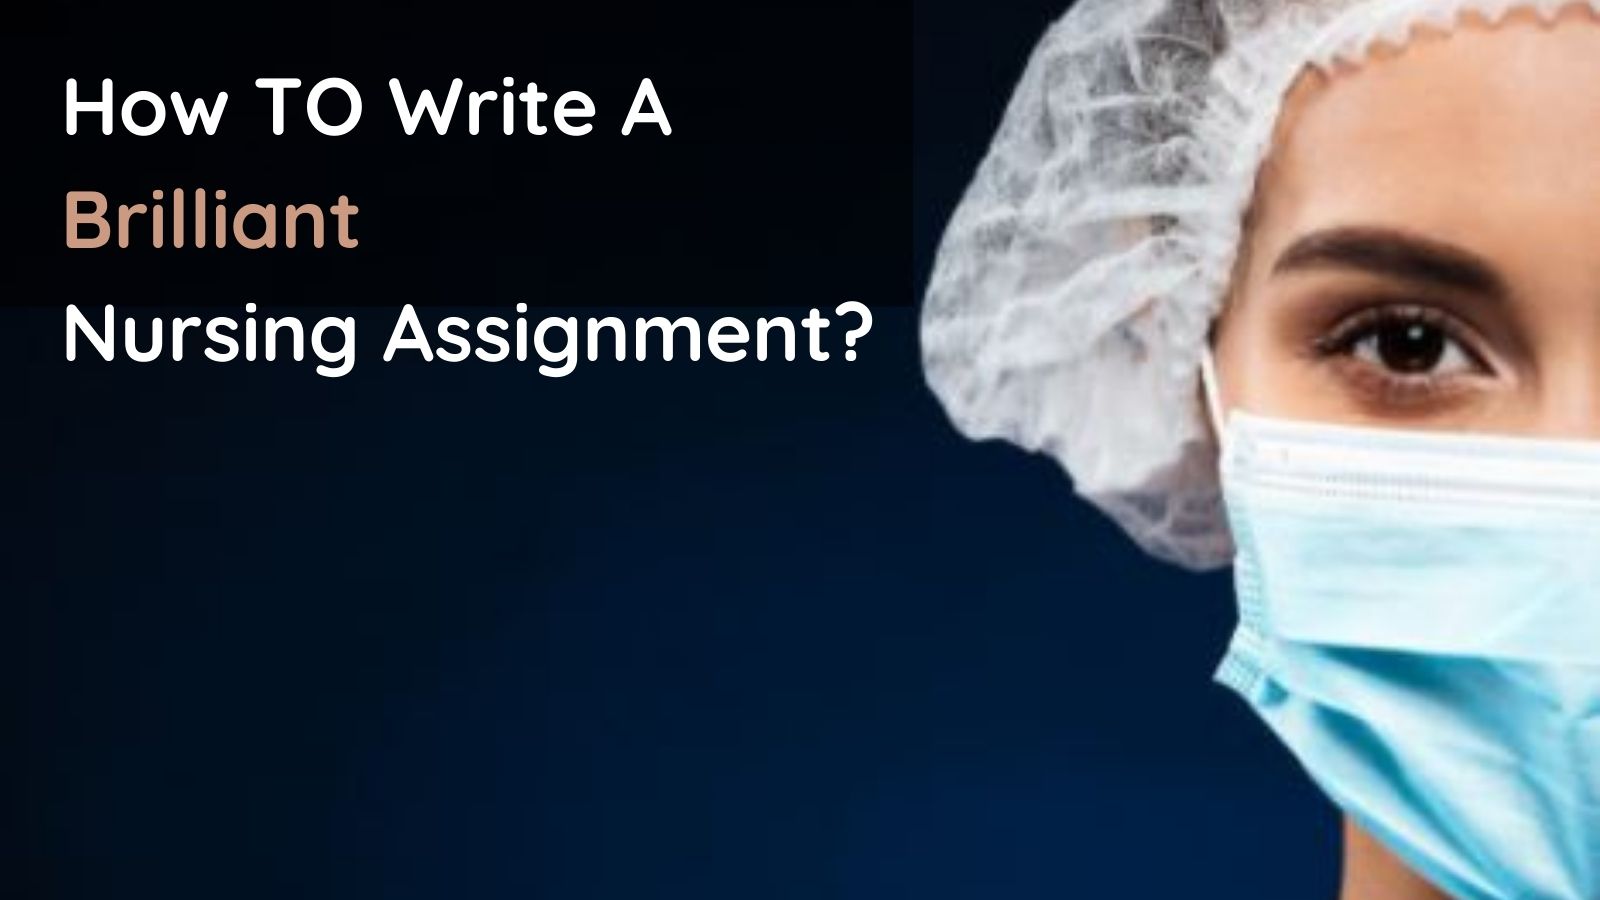 Nursing Assignment Writing